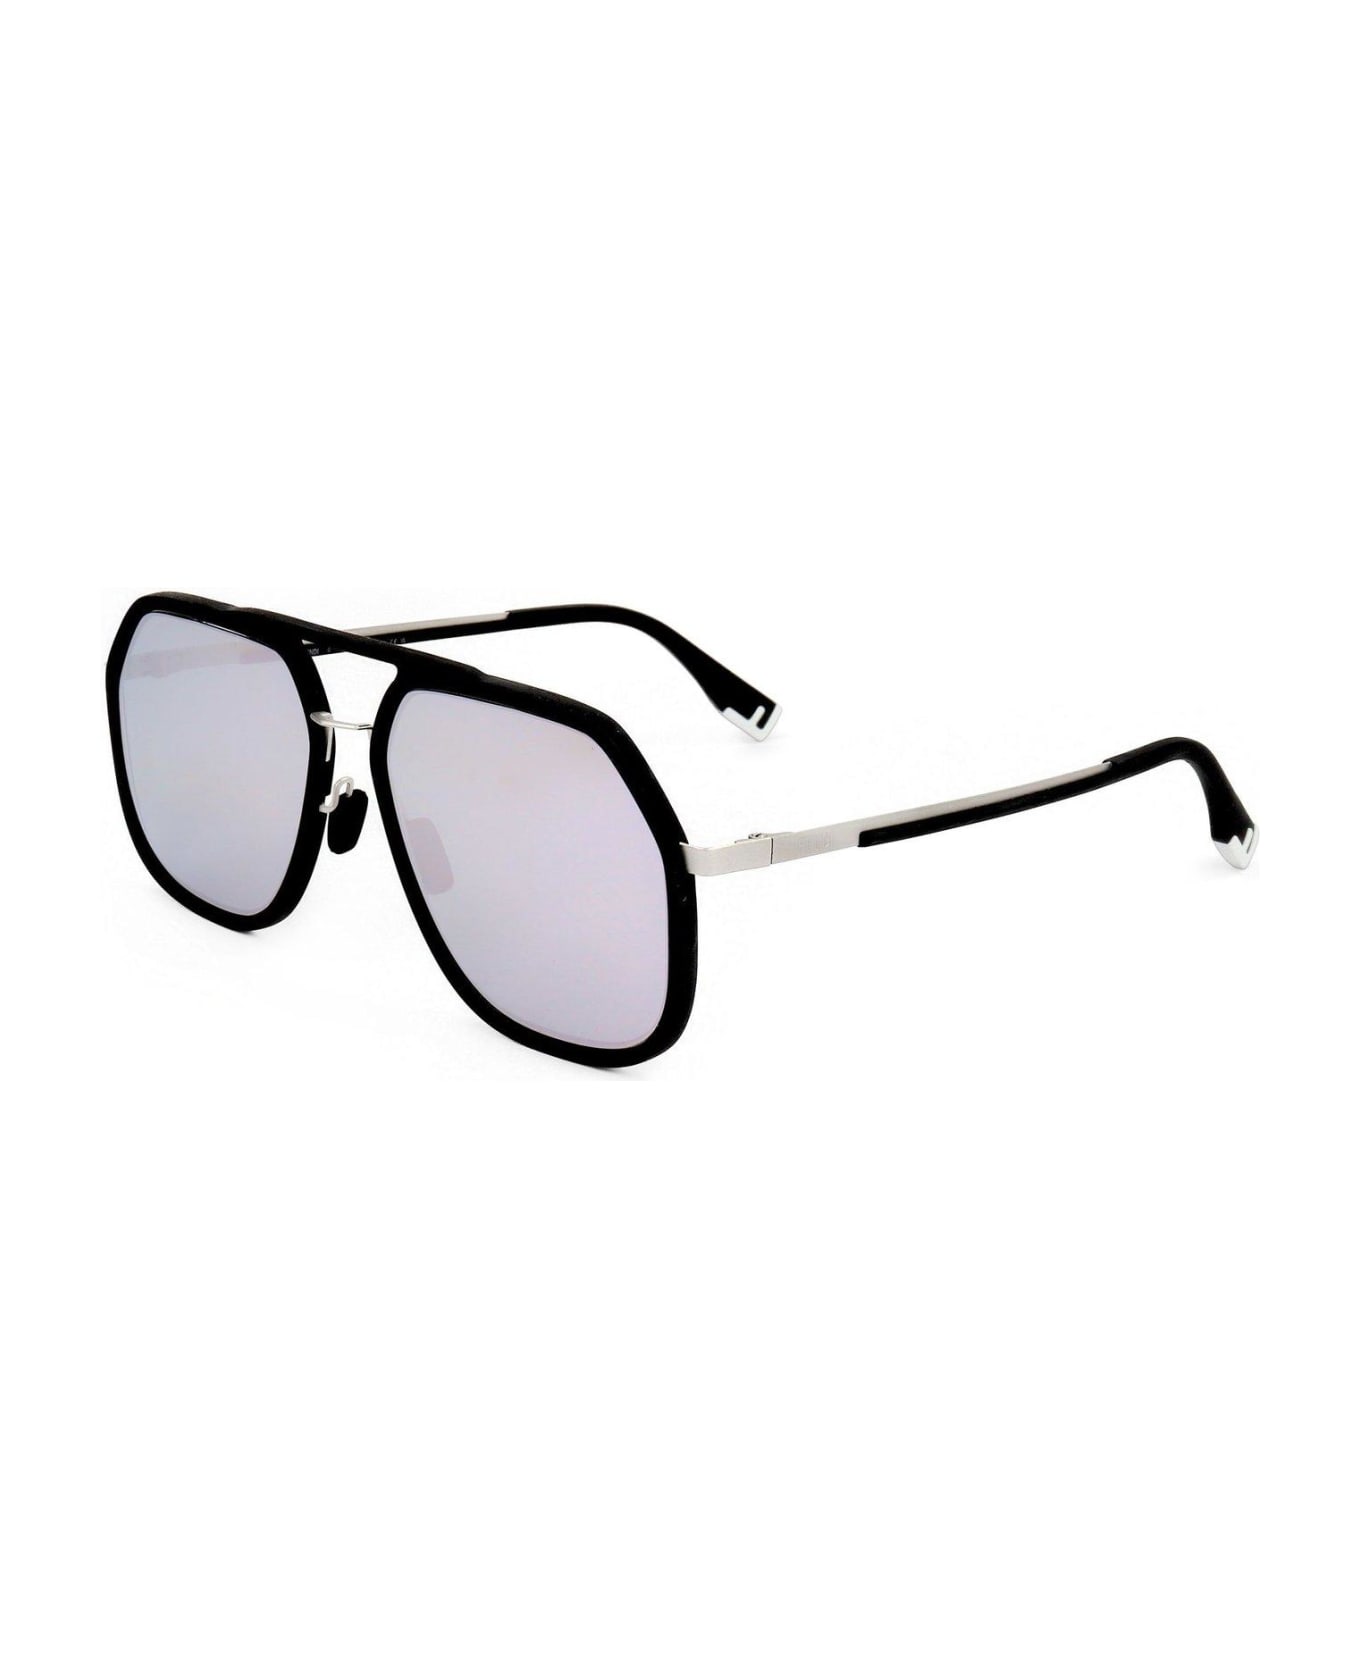 Fendi Eyewear Pilot Frame Sunglasses - 02c サングラス